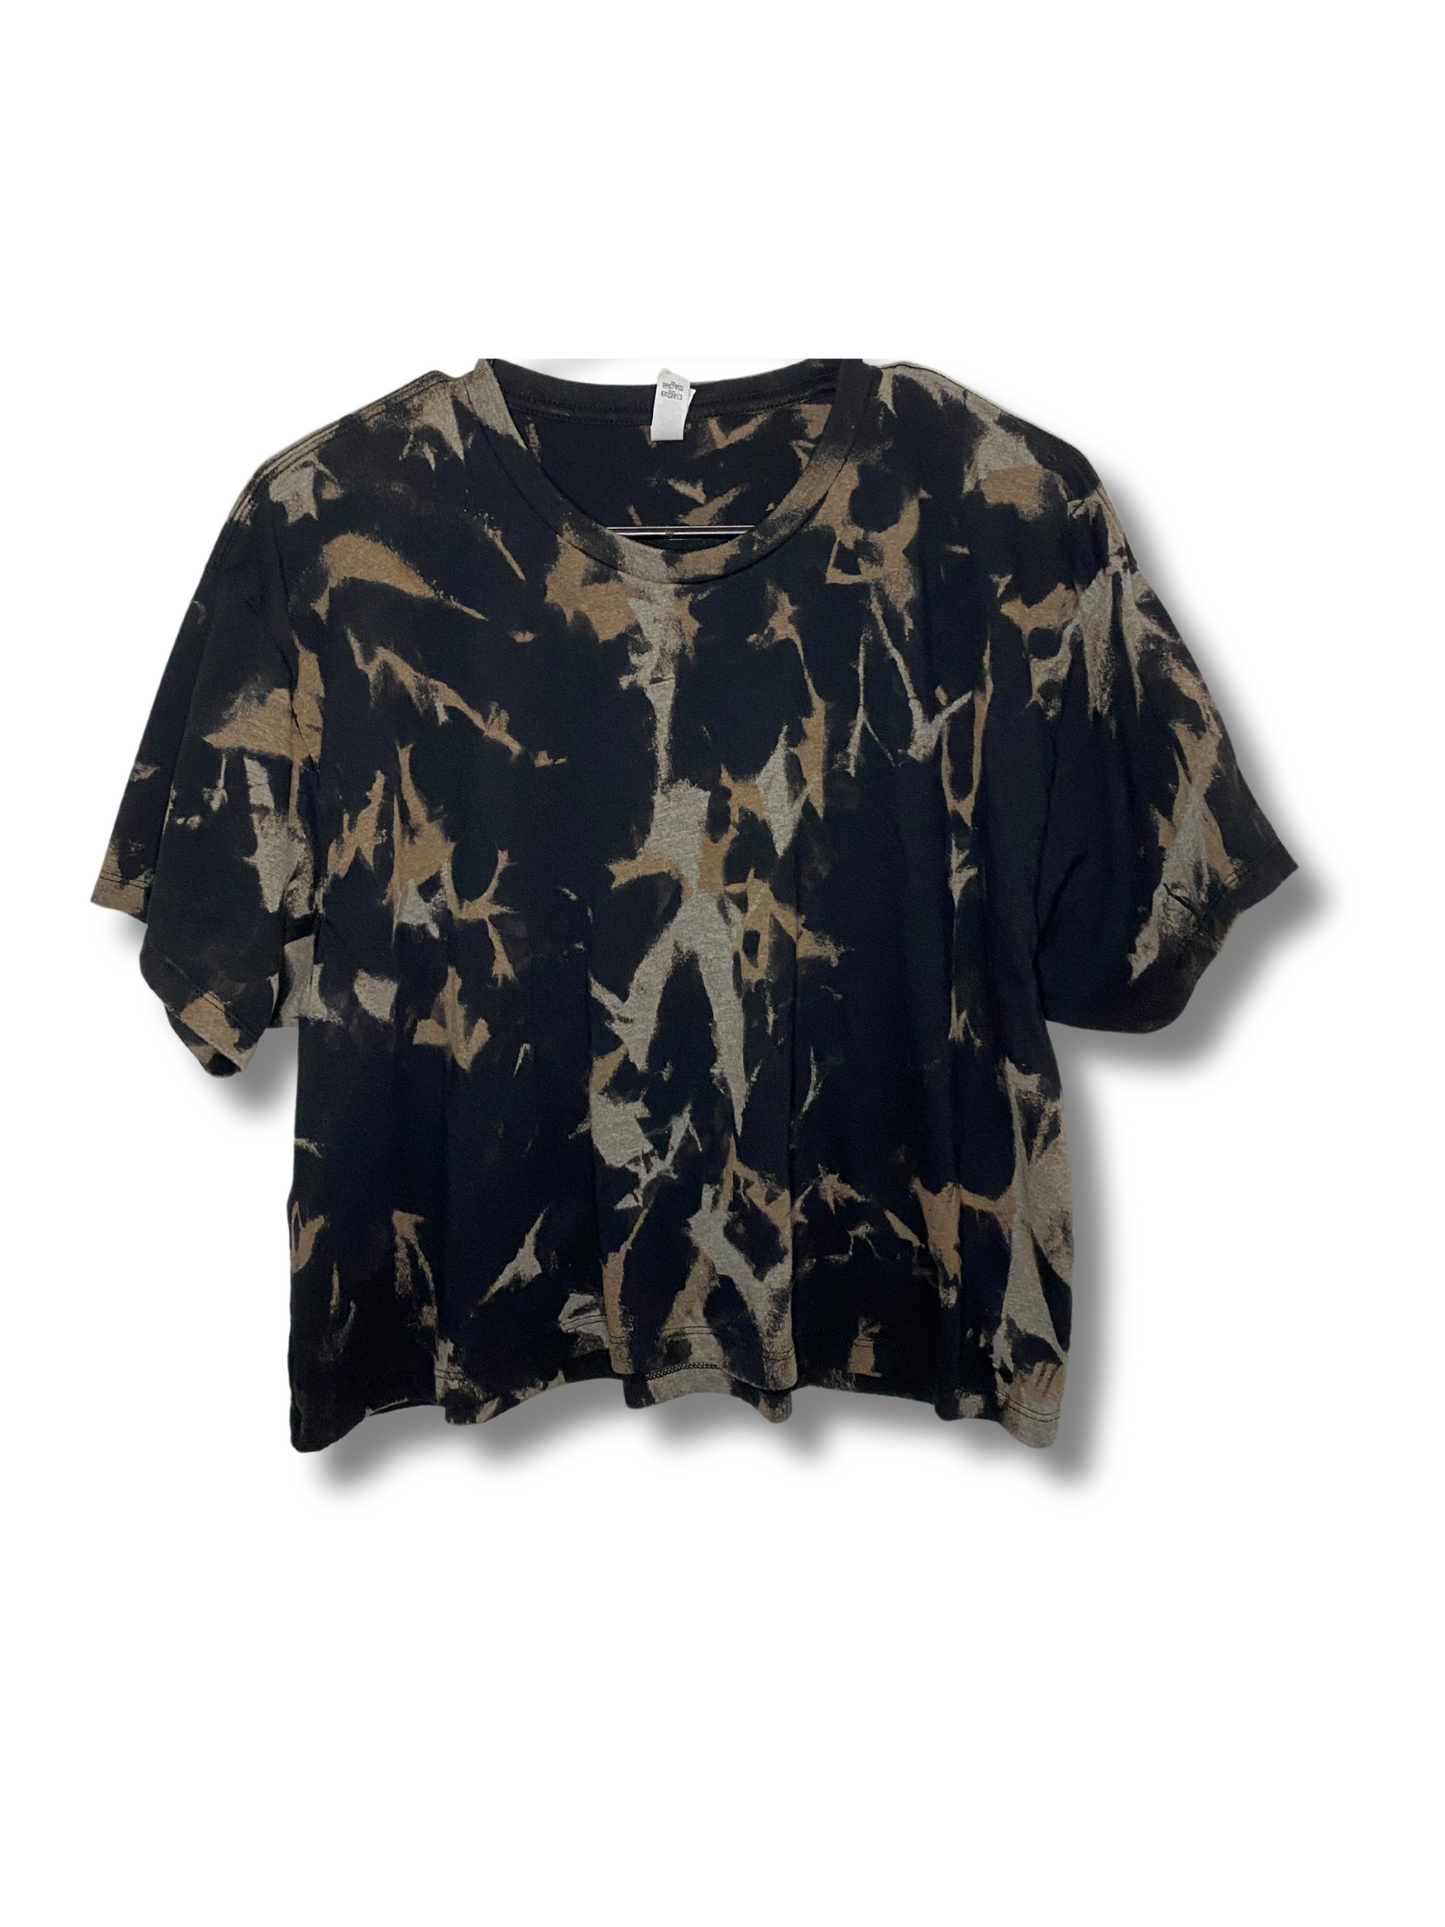 Reputation Black Acid Wash Cropped T-Shirt